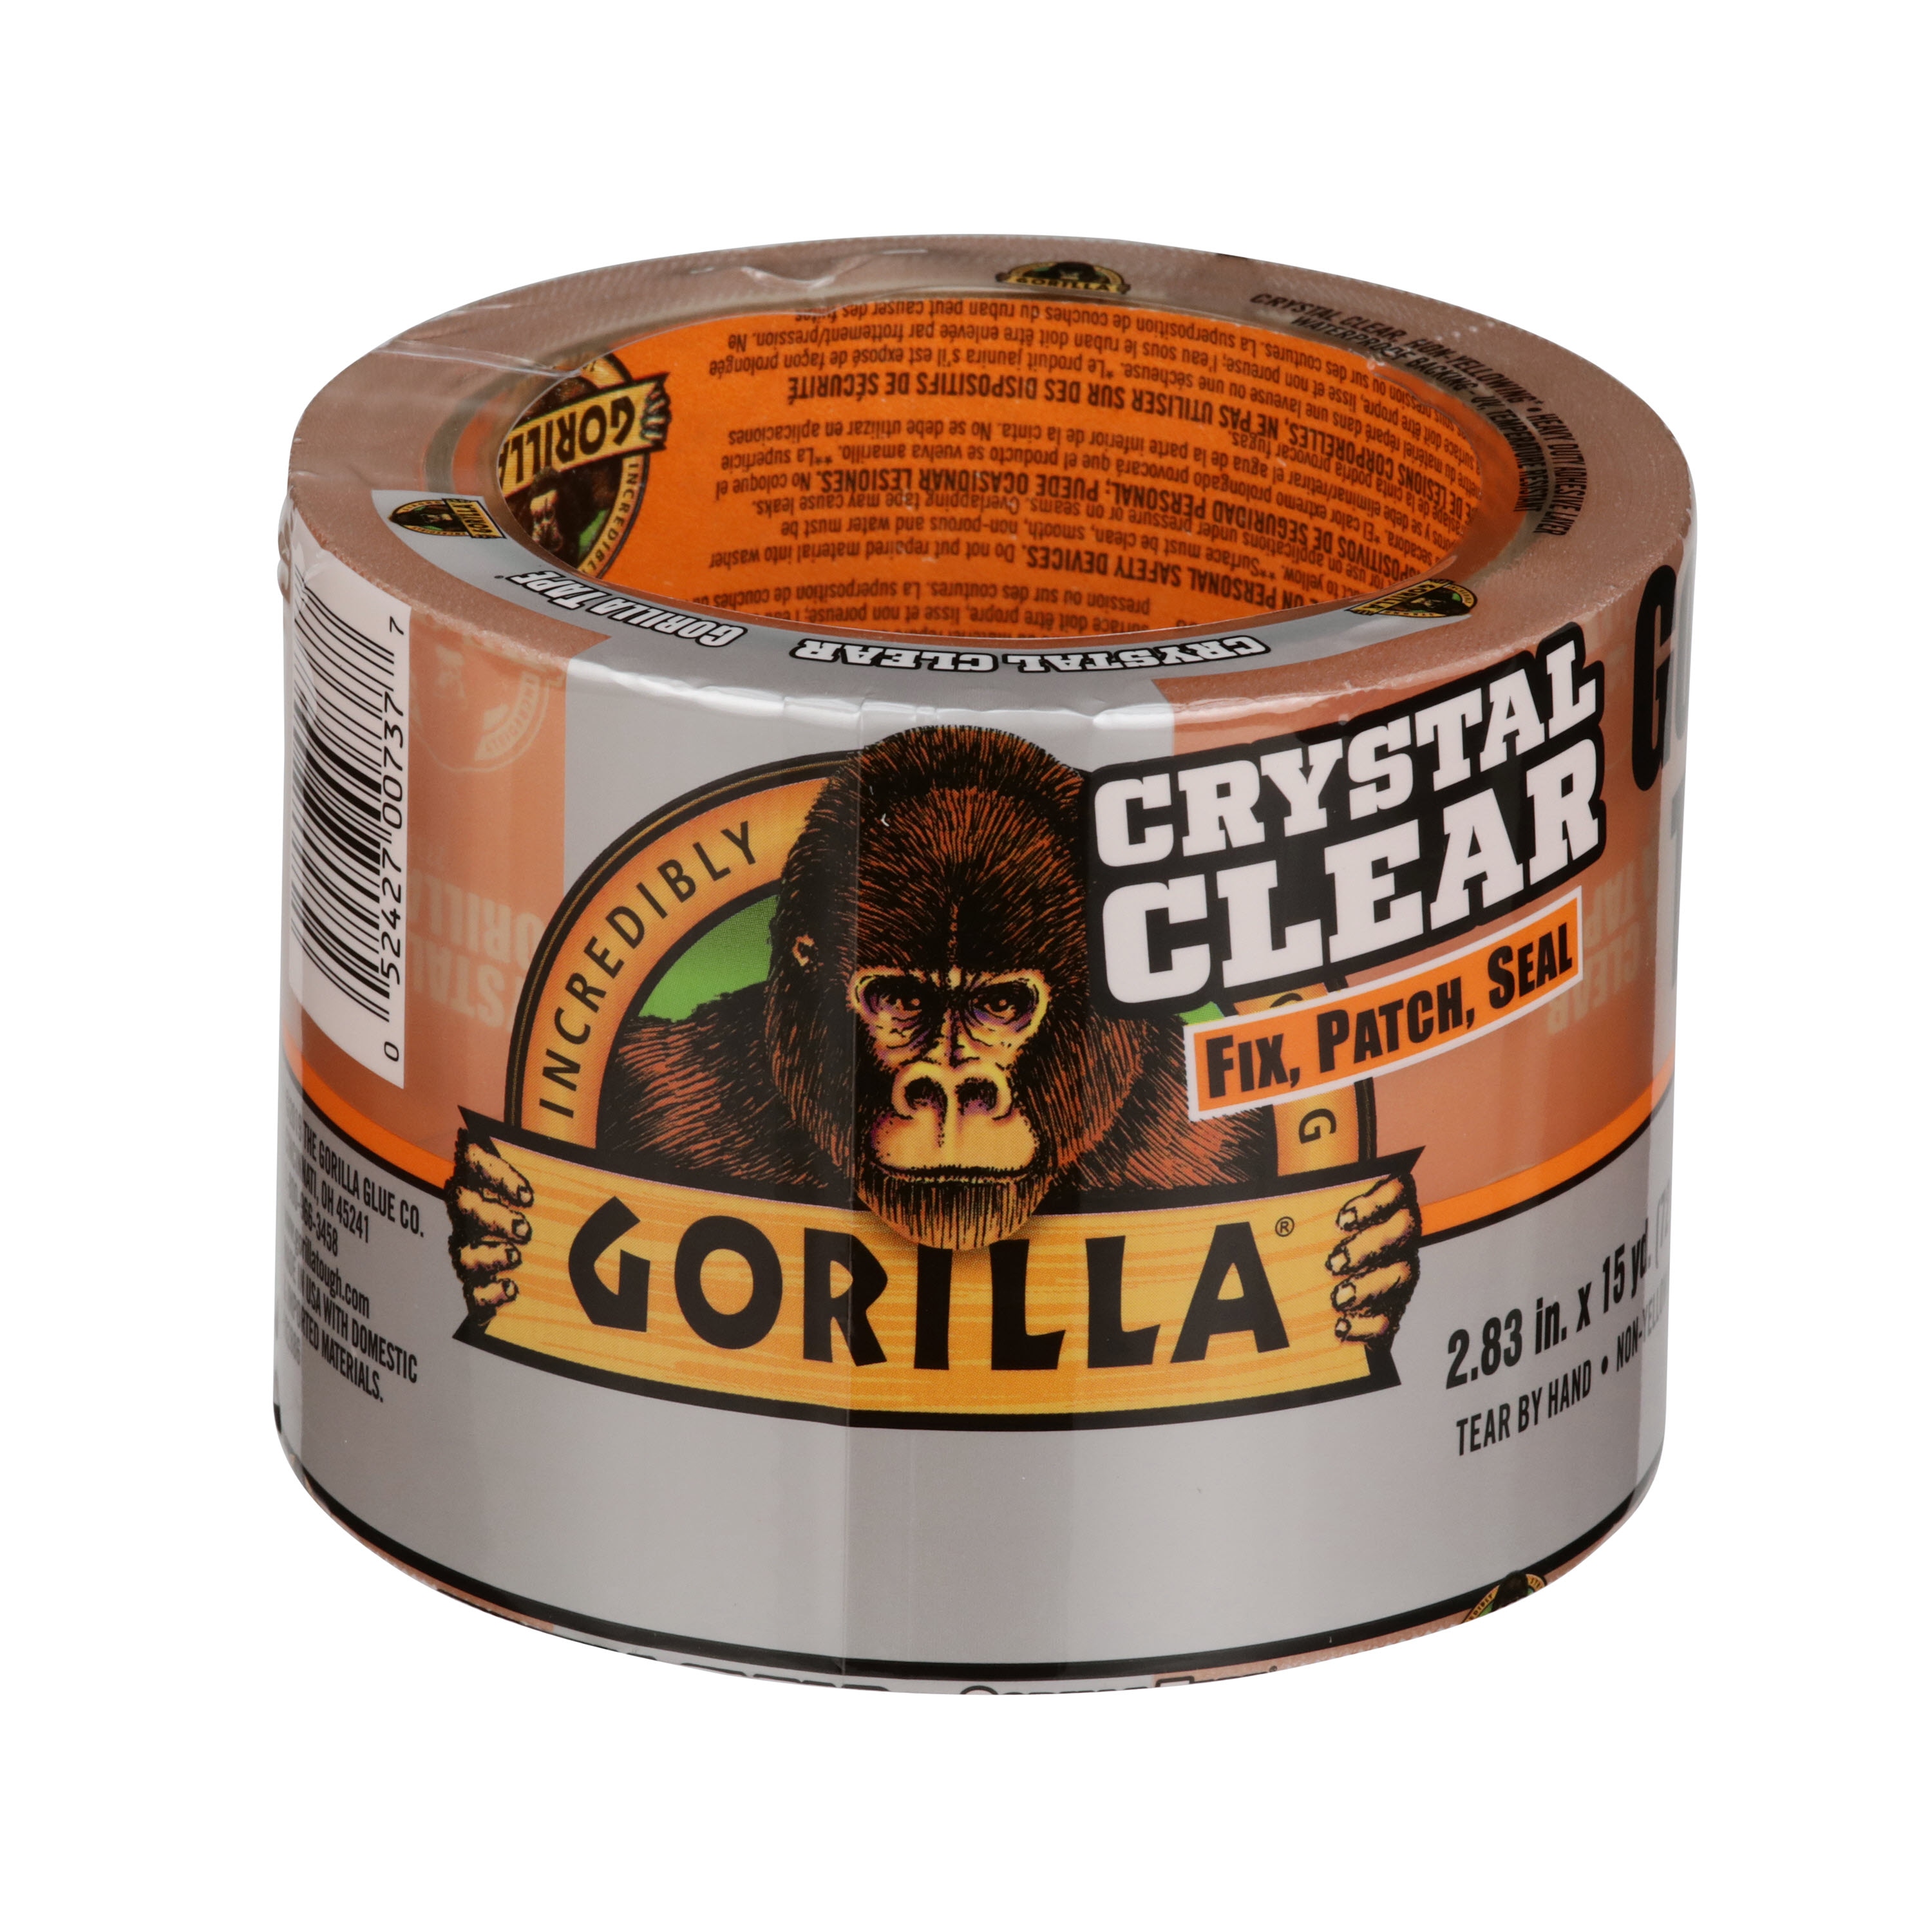 Gorilla 1.88 In. x 18 Yd. Crystal Clear Duct Tape, Clear - Murfreesboro, TN  - Kelton's Hardware & Pet